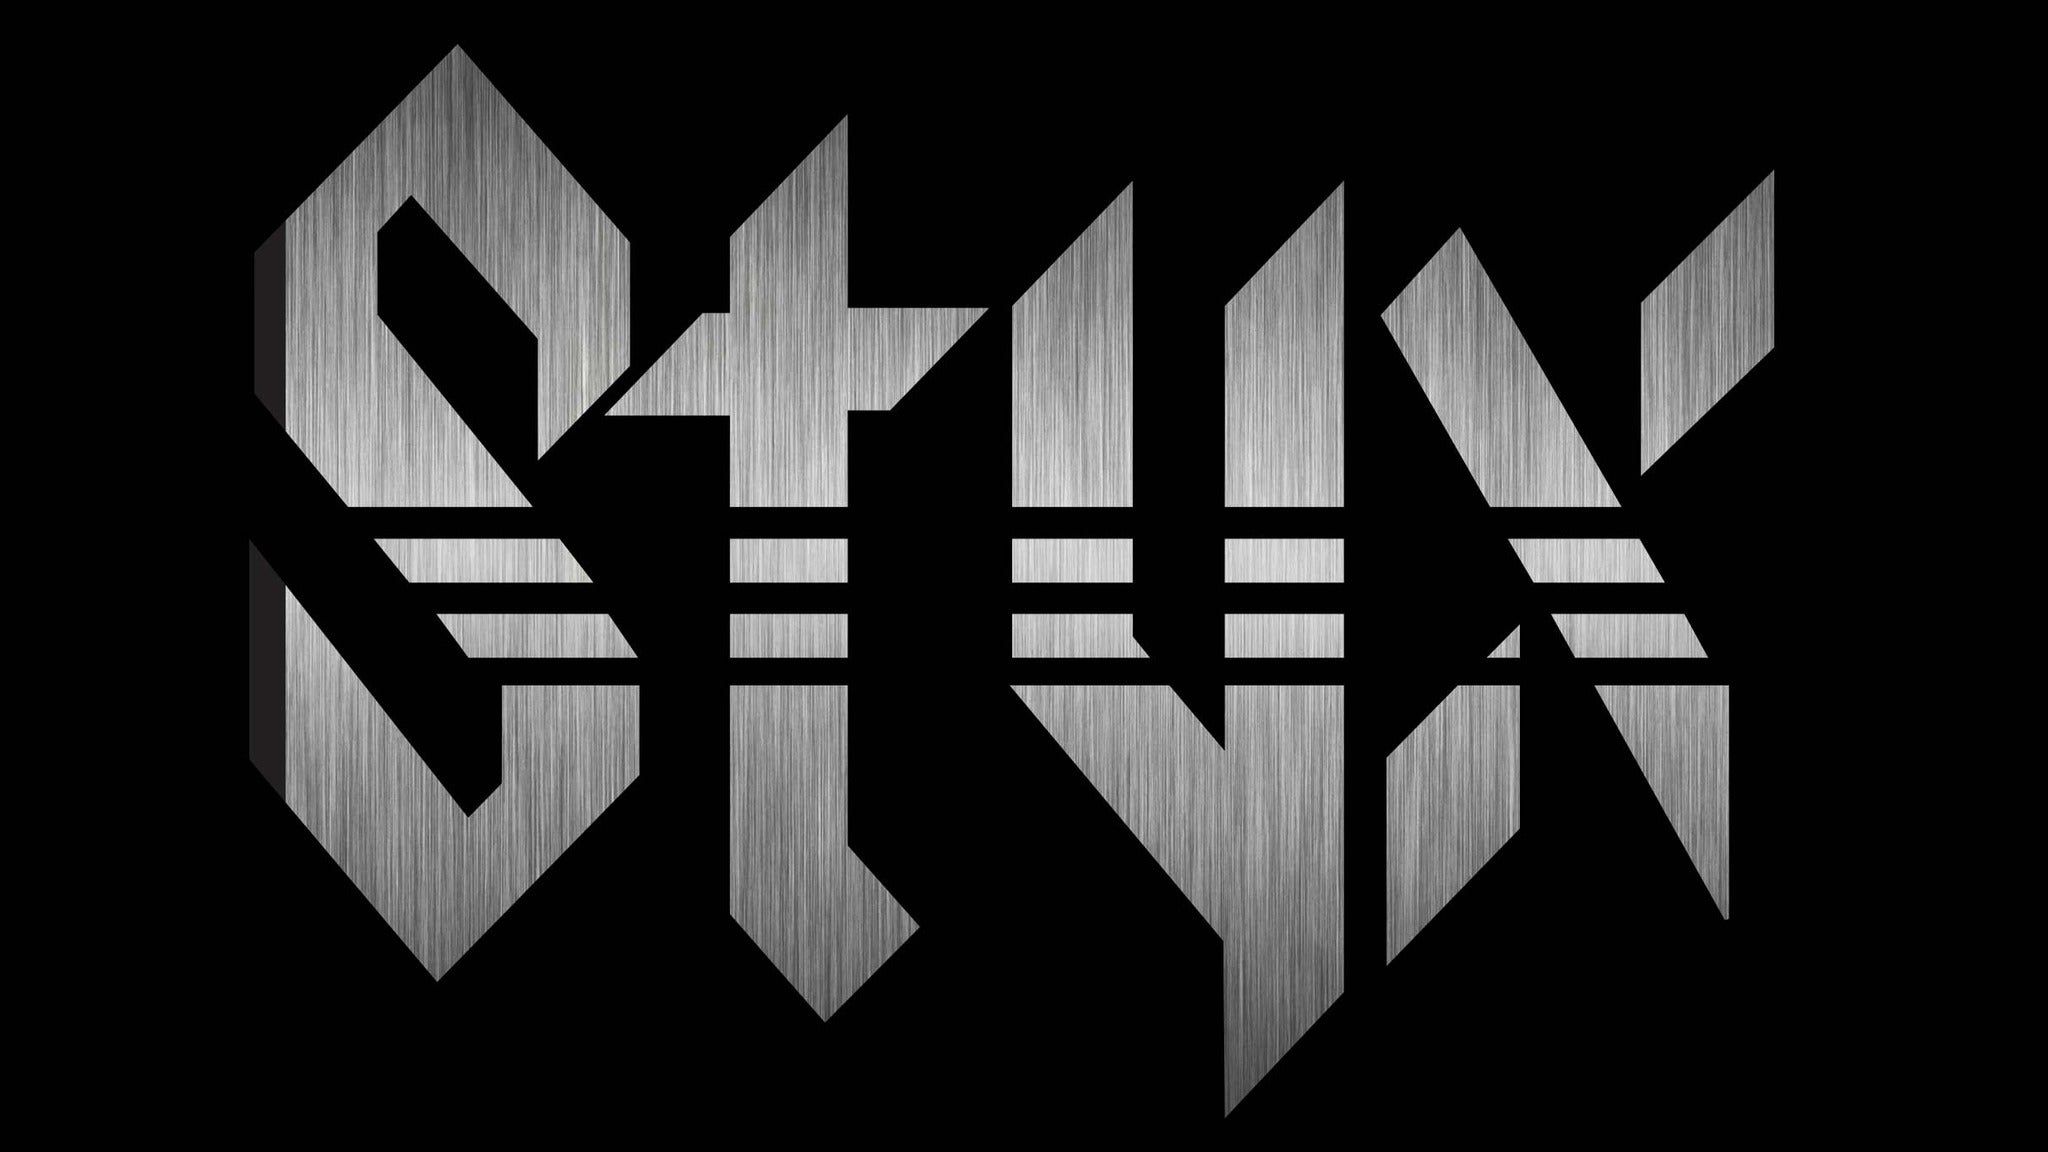 Styx: Tour Dates & Tickets, News, Tour History, Setlists, Links